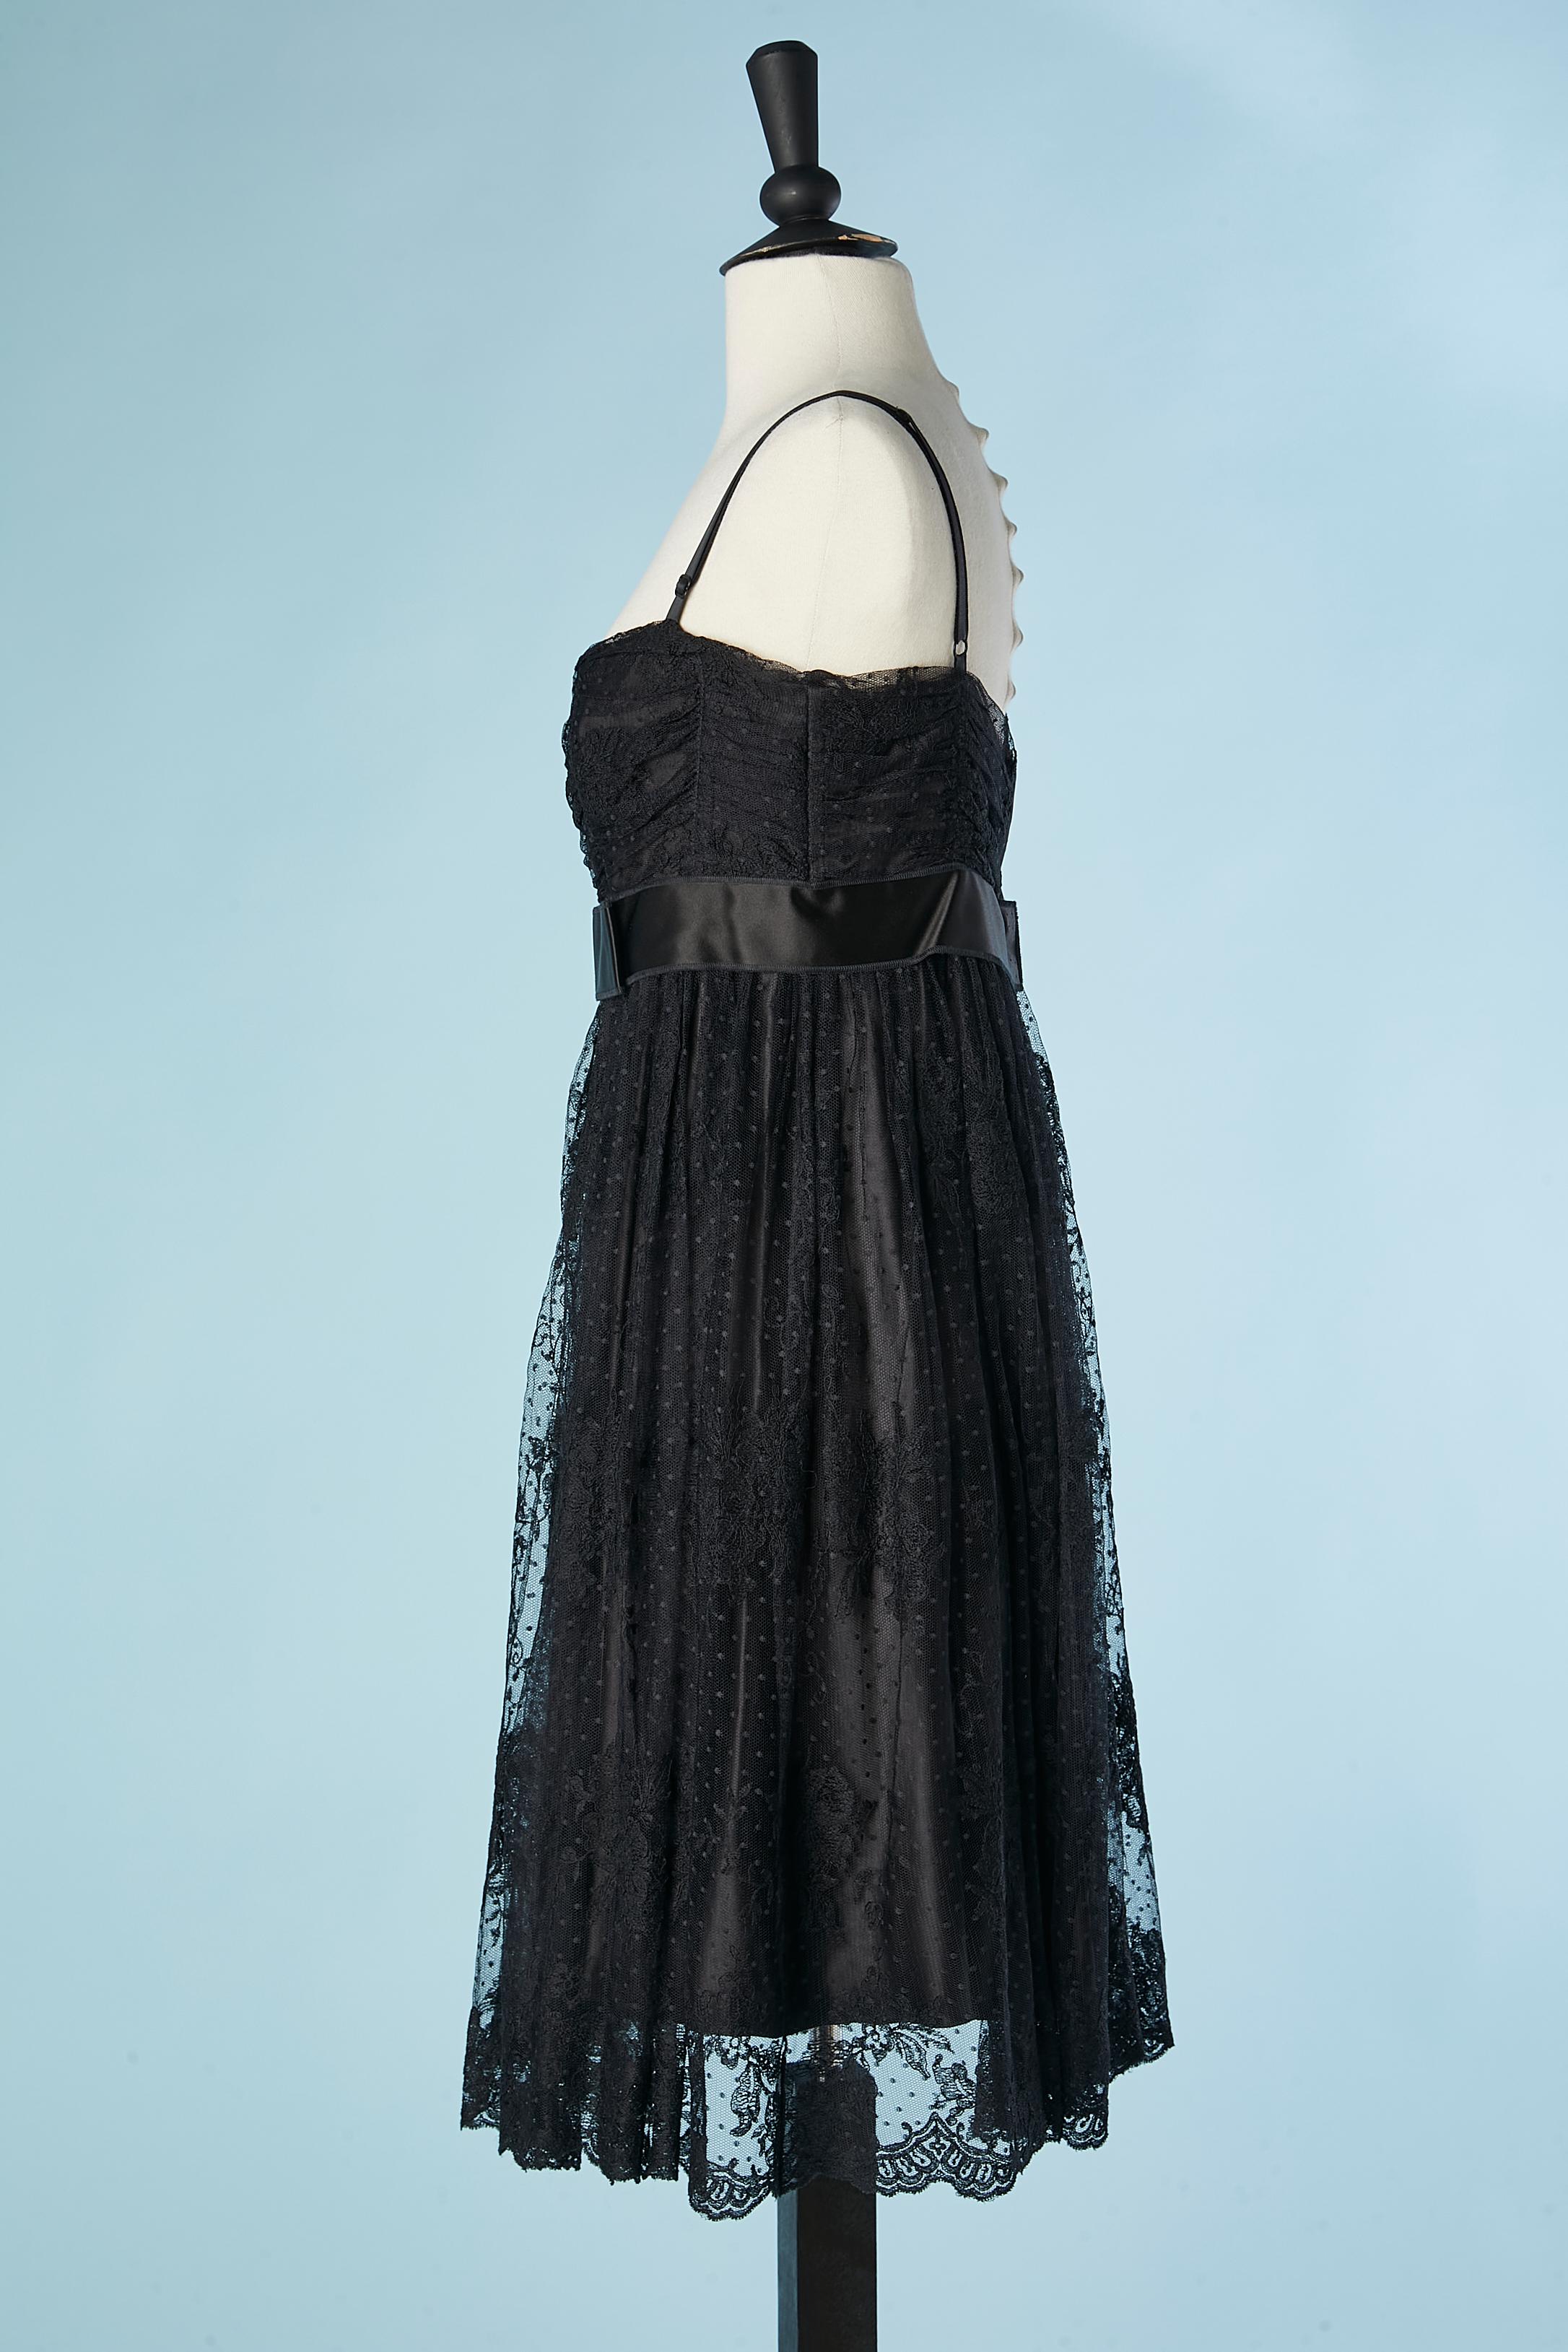 Black lace cocktail dress with black satin belt Dolce & Gabbana  For Sale 1